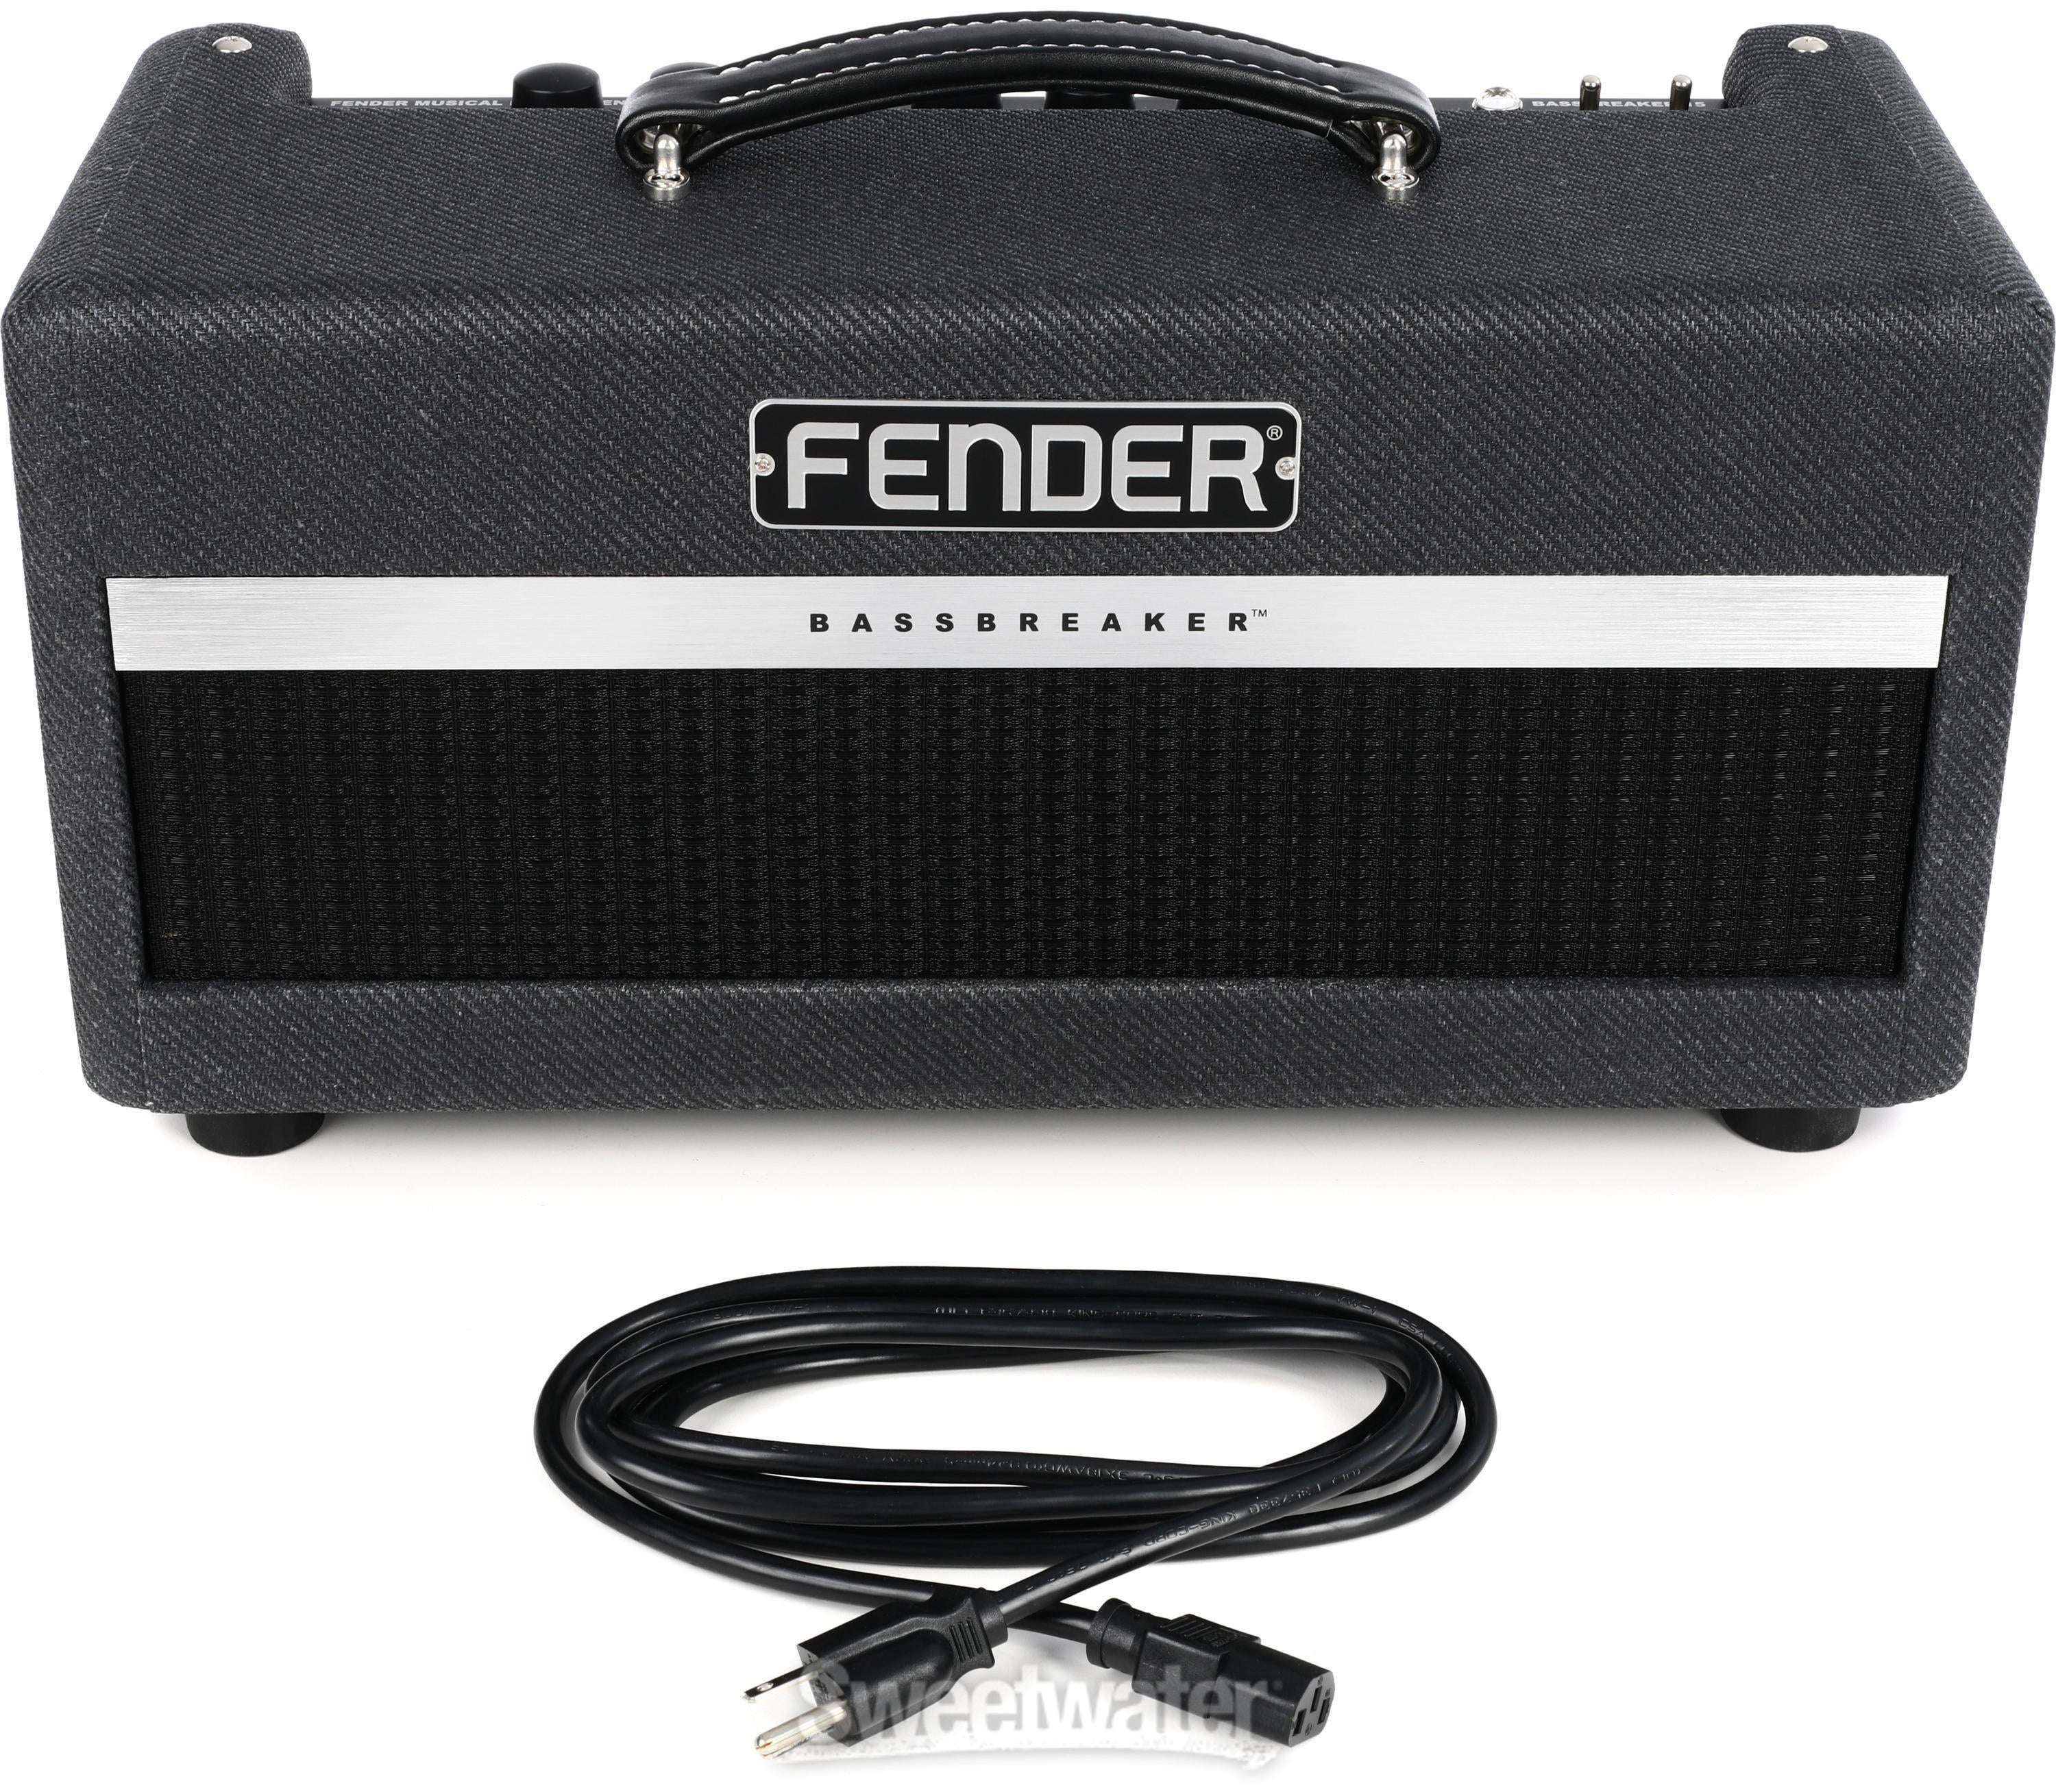 Fender Bassbreaker 15 - 15-watt Tube Head